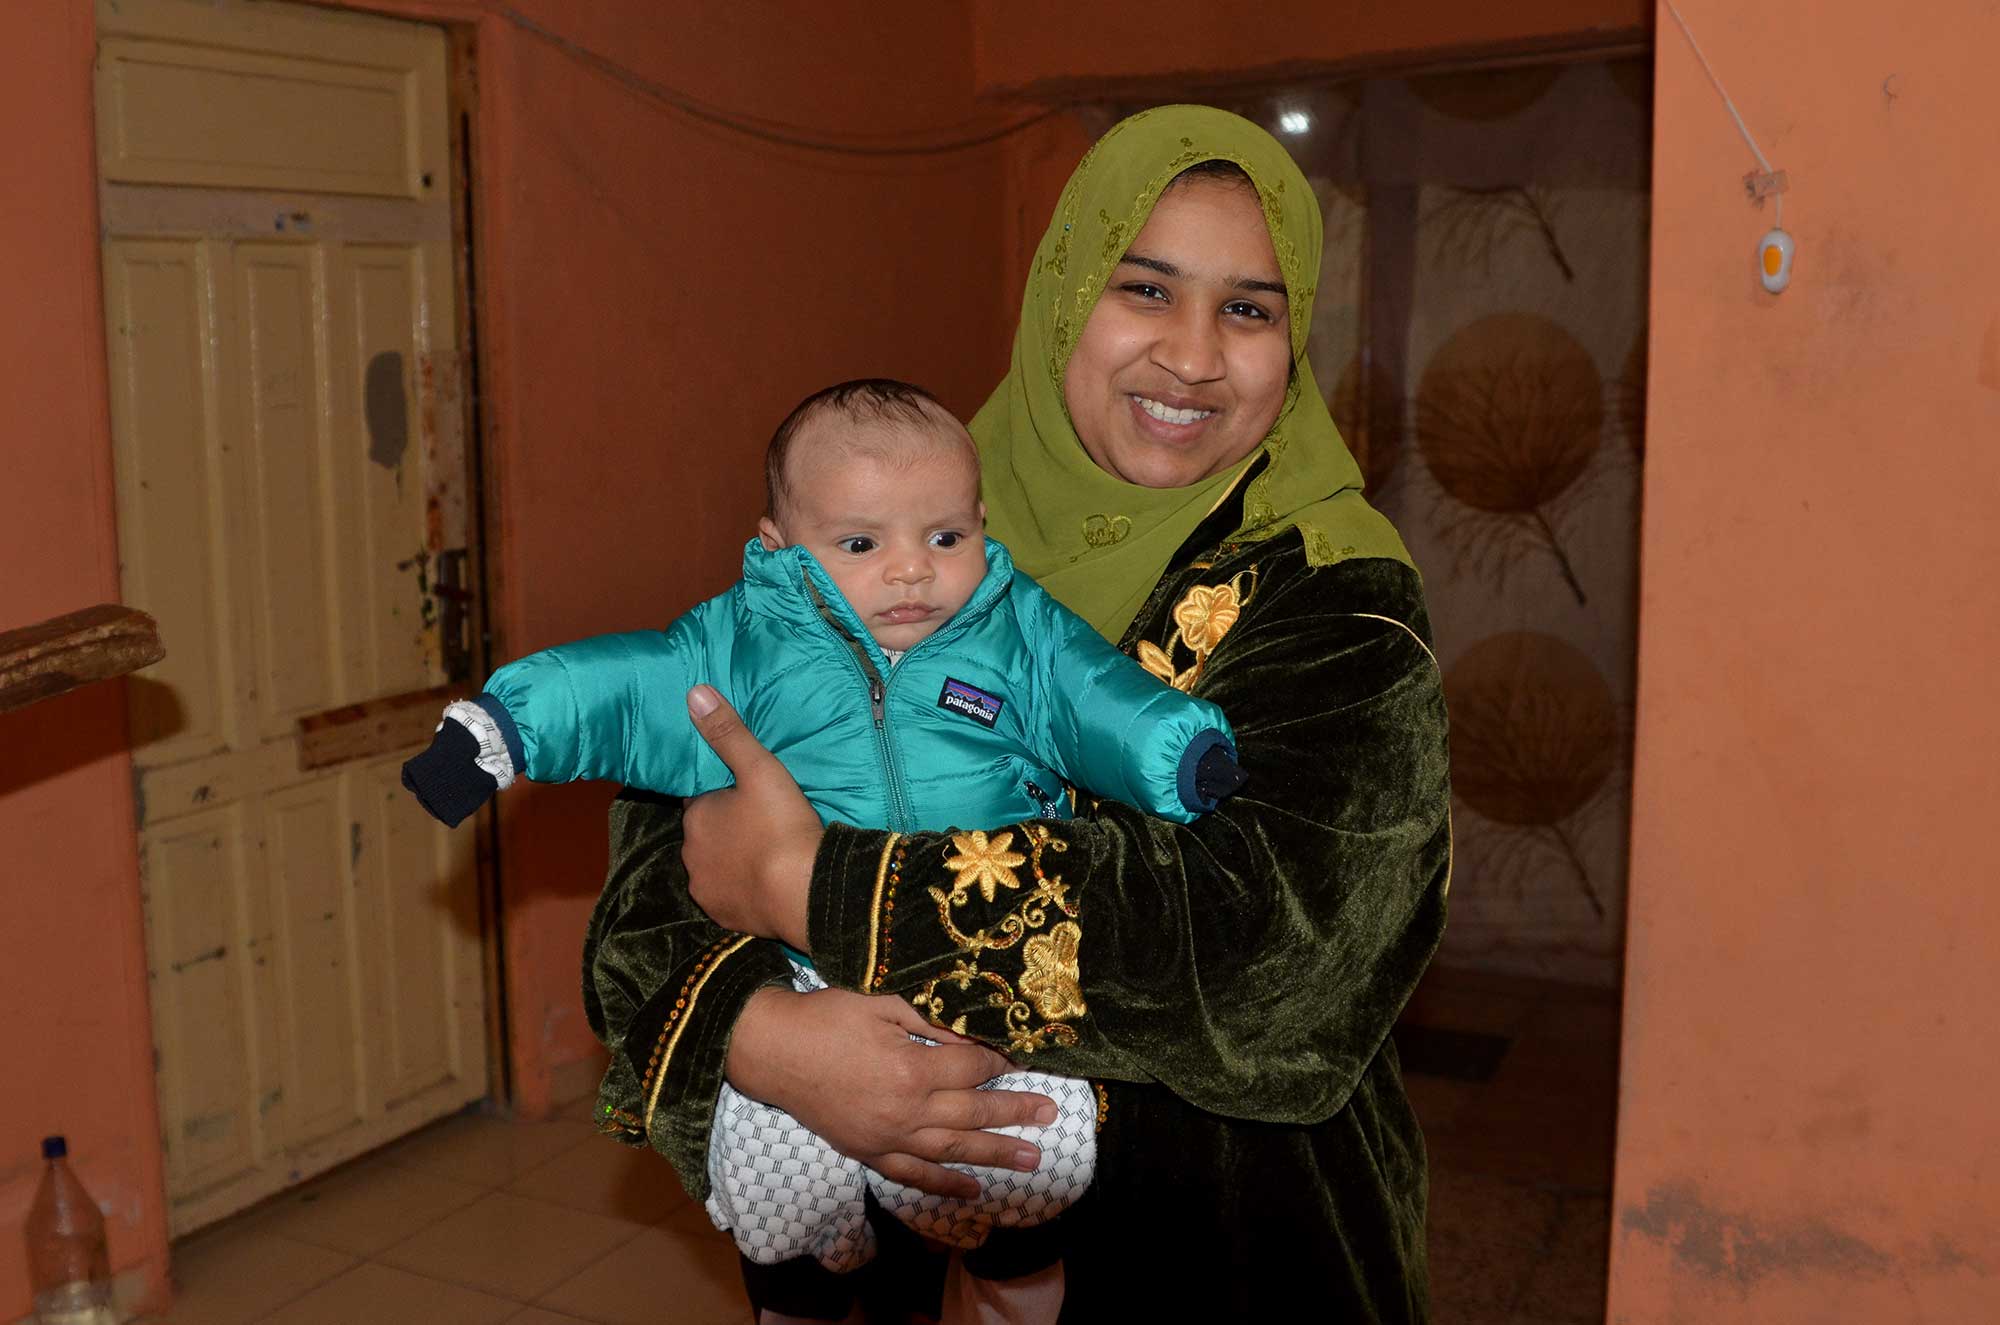 Gaza mothers like Asmaa need help to keep children warm this winter.